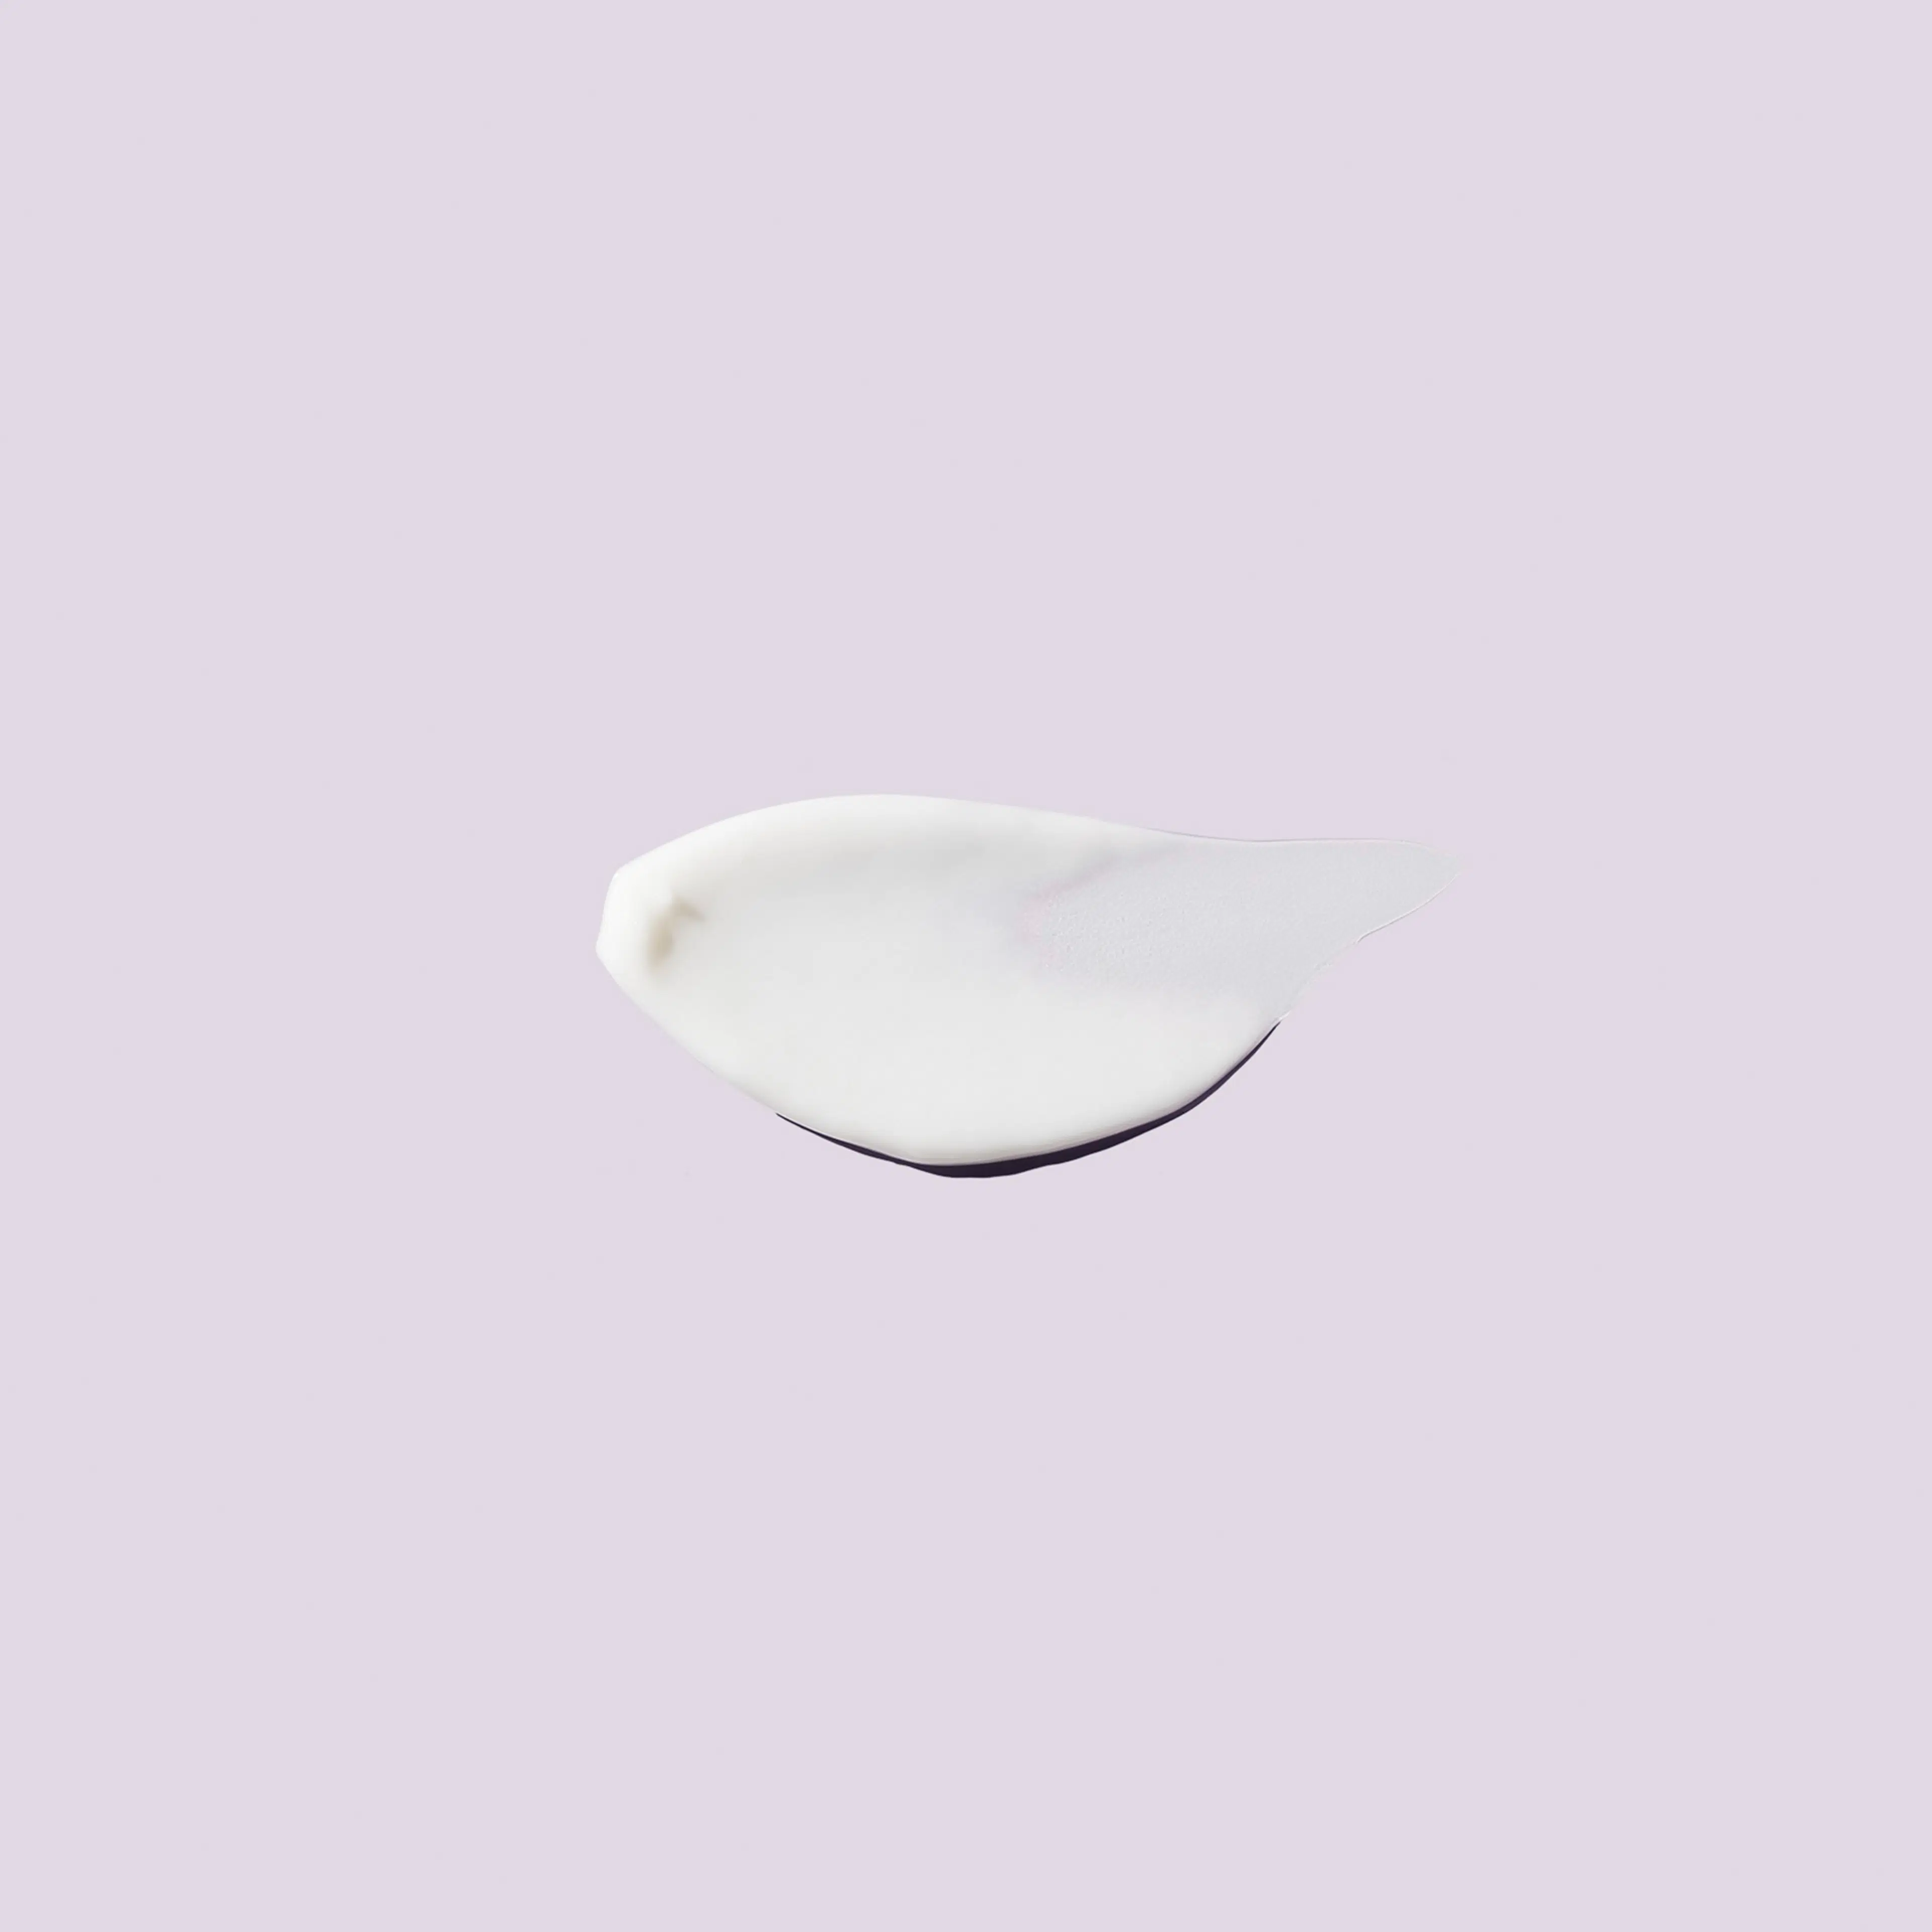 Fenty Skin Flash Nap Instant Revival Eye Gel-Cream silmänympärysvoide 15 ml